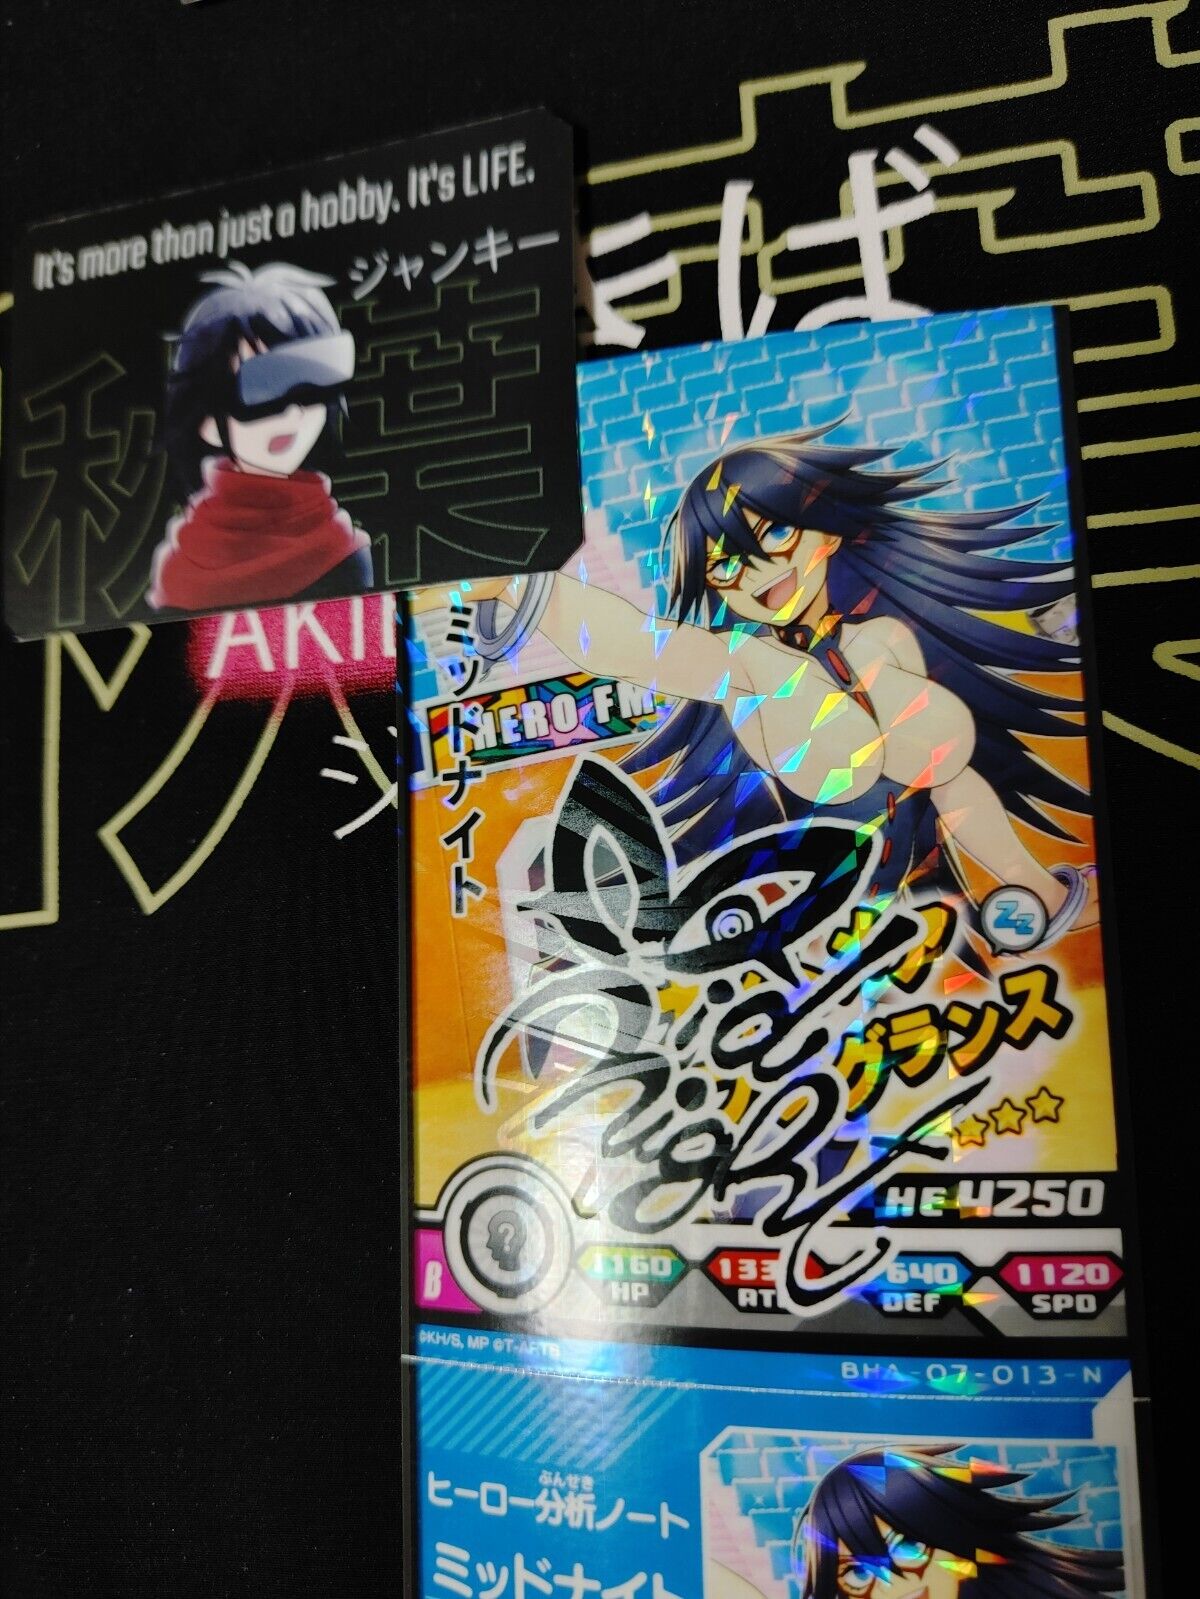 My Hero Academia Heroes Battle Rush Card Midnight BHA-07-013-N Sign Japan